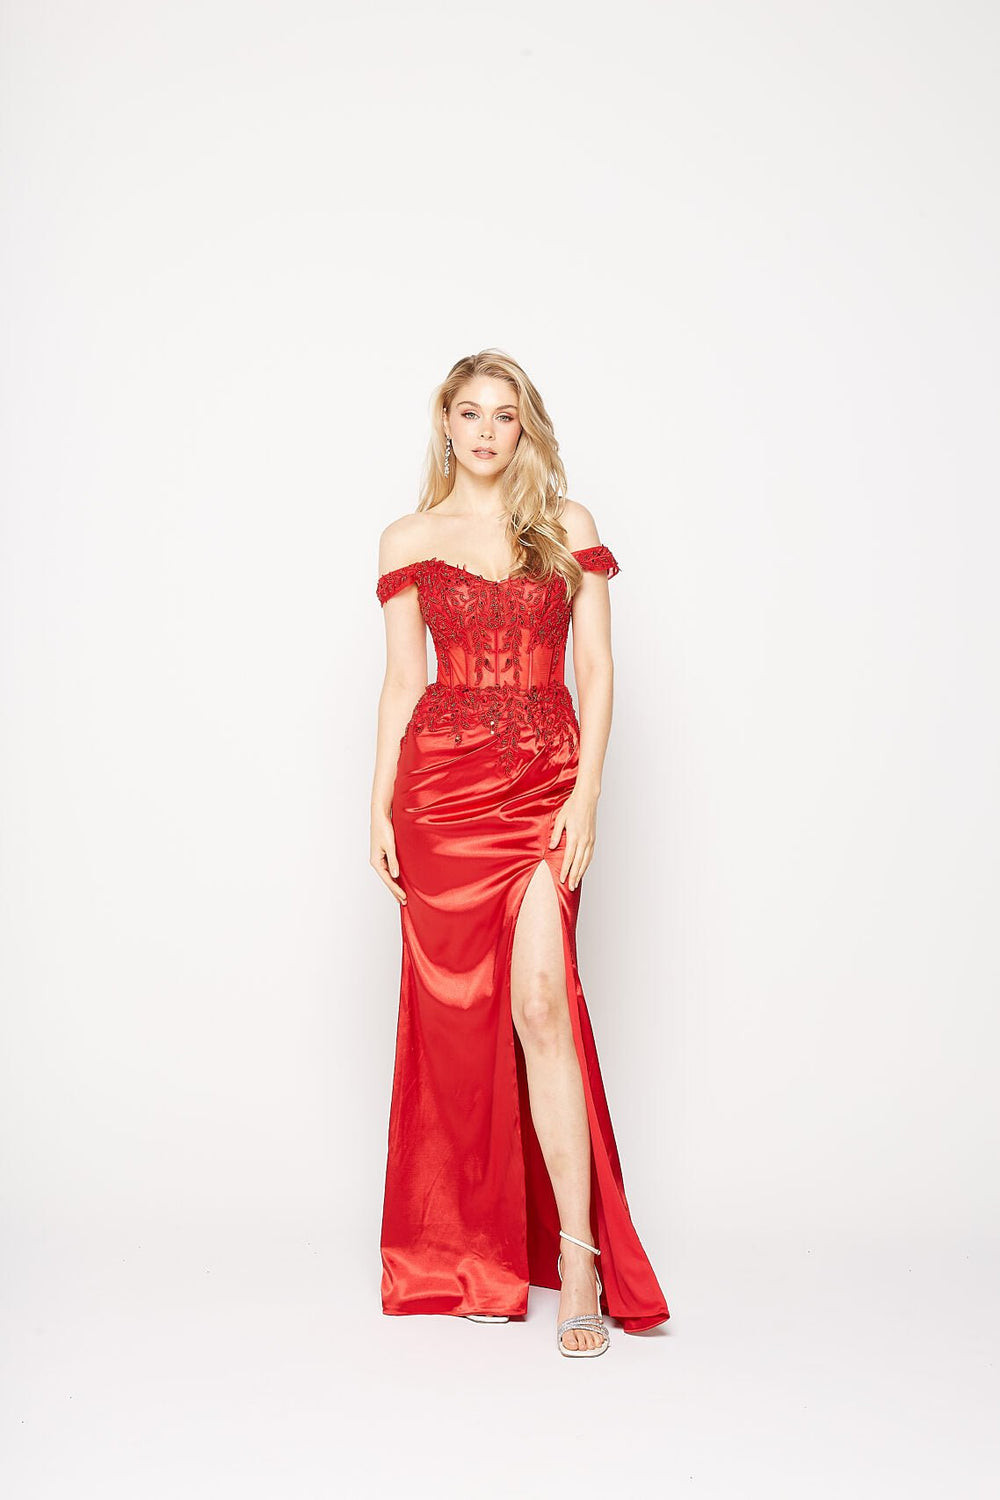 Lorelei Dress by Tania Olsen PO2304 - ElissaJay Boutique